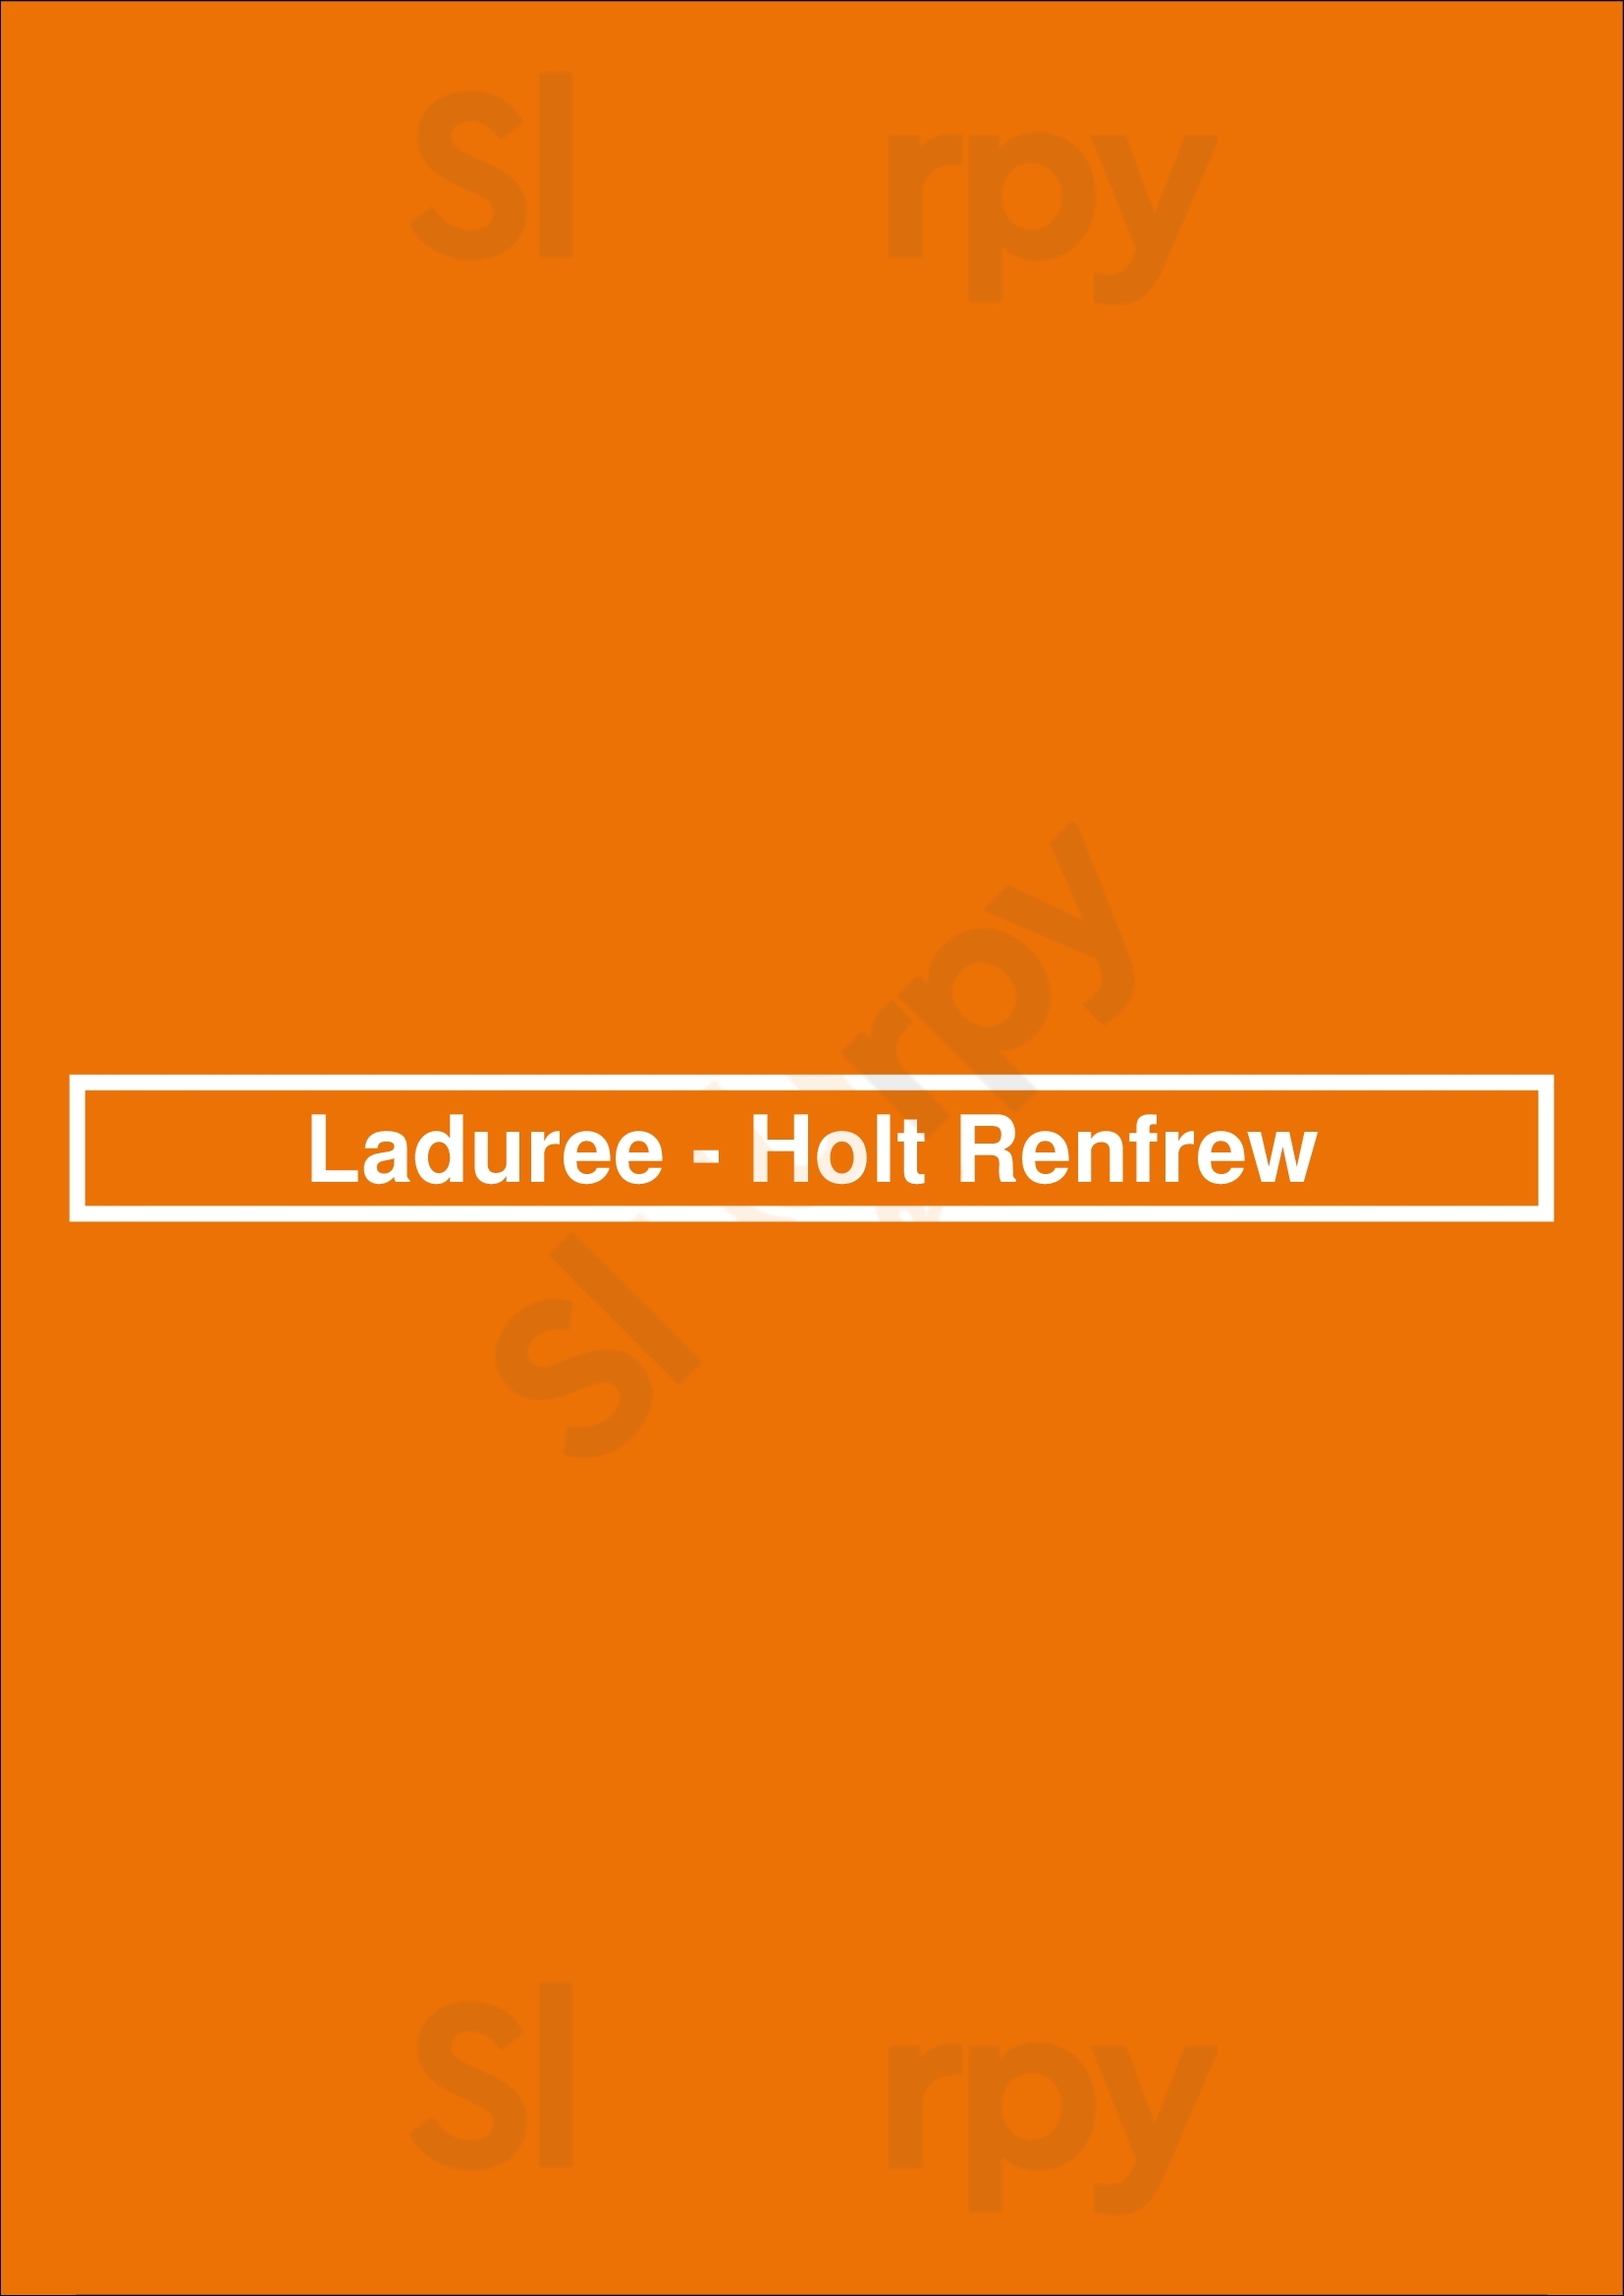 Laduree - Holt Renfrew Vancouver Menu - 1